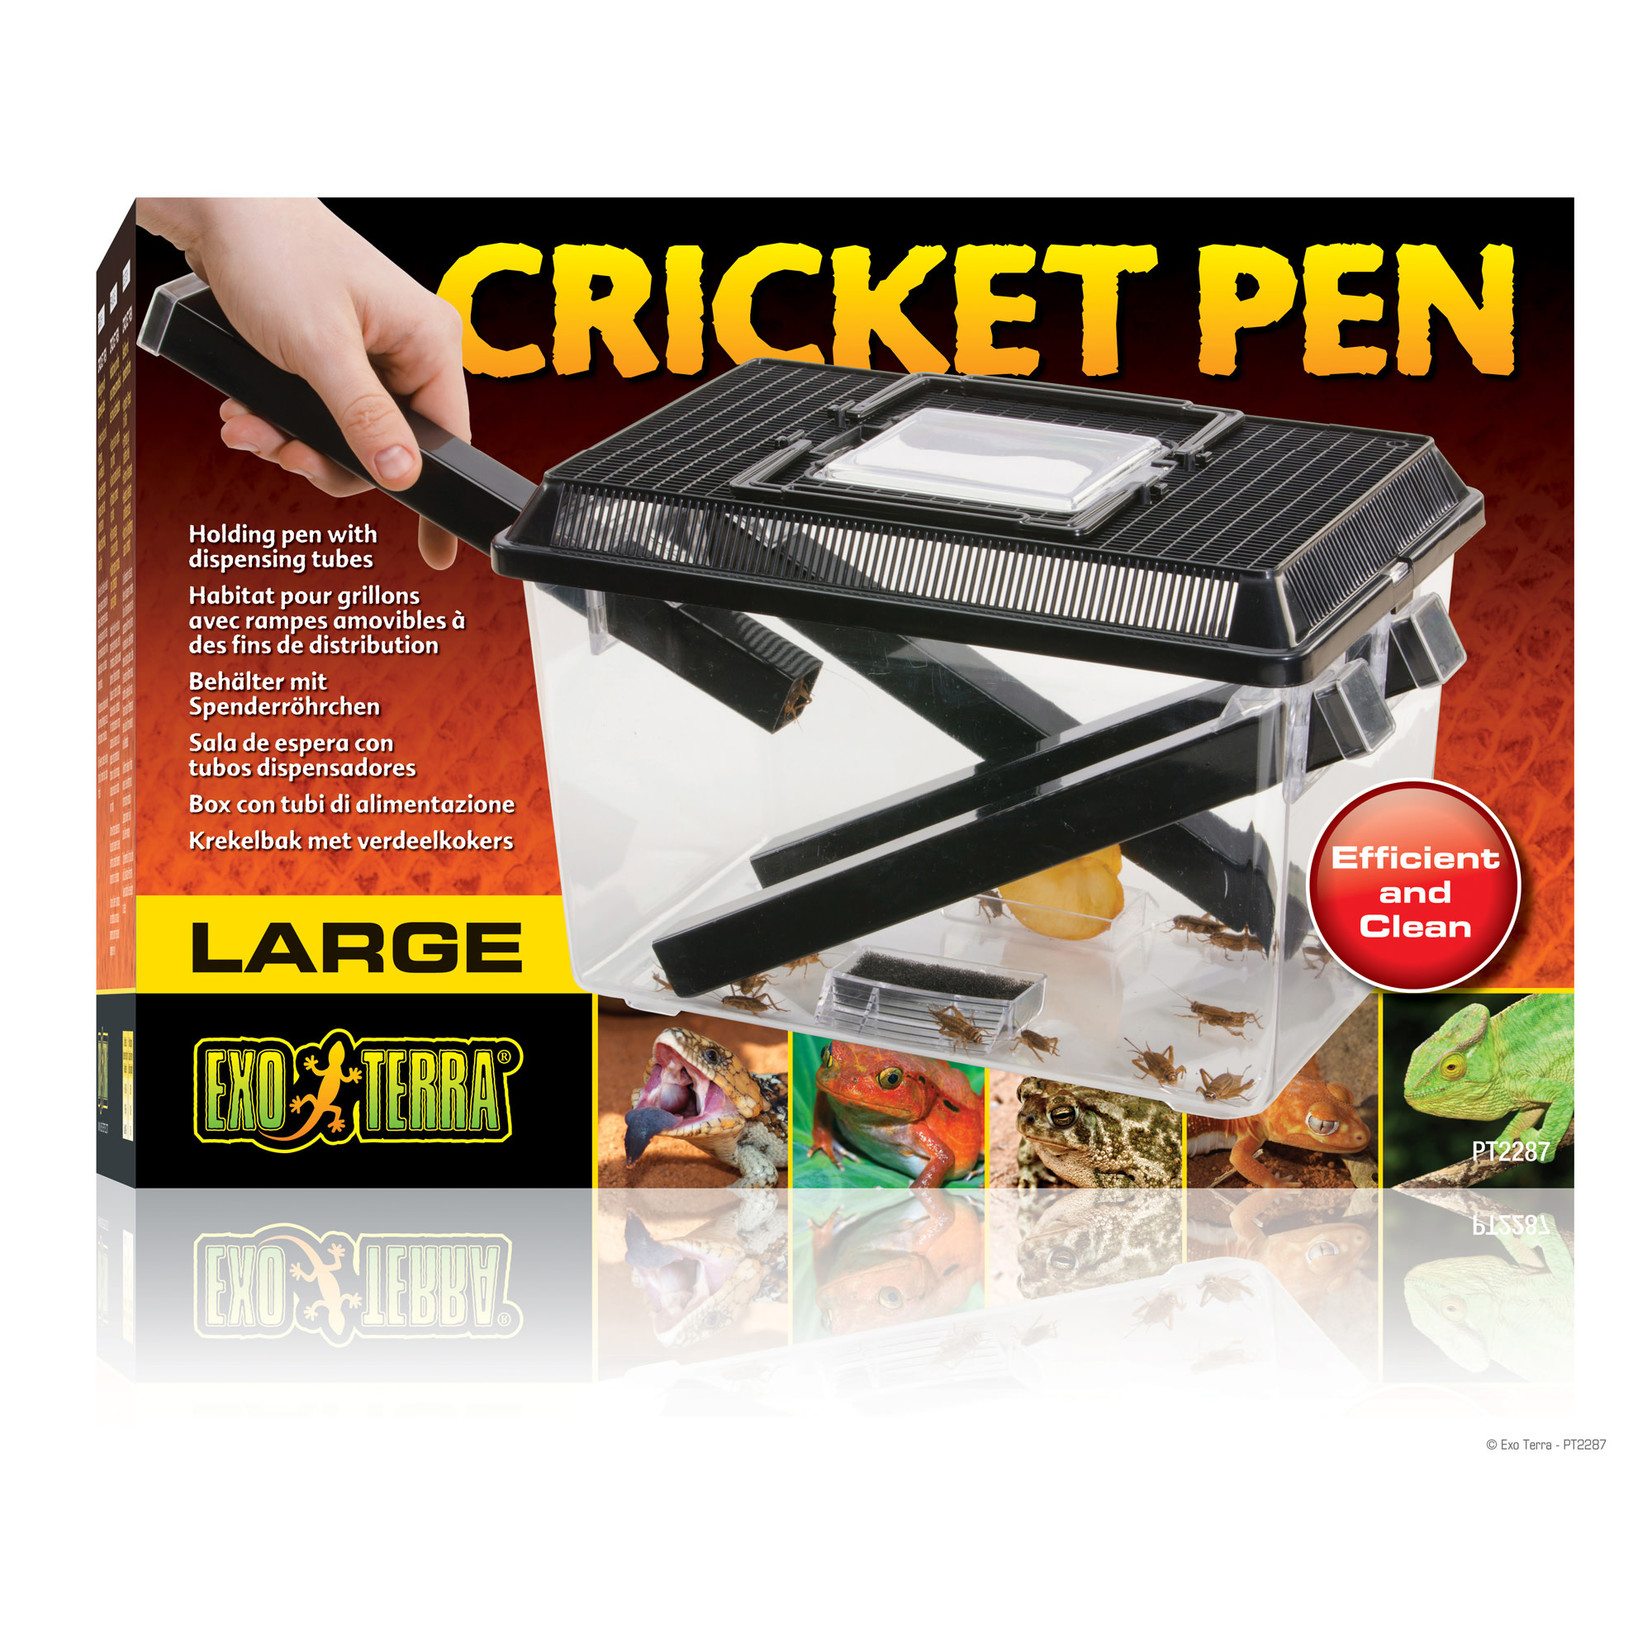 EXO-TERRA Exo Terra Cricket Pen, Large